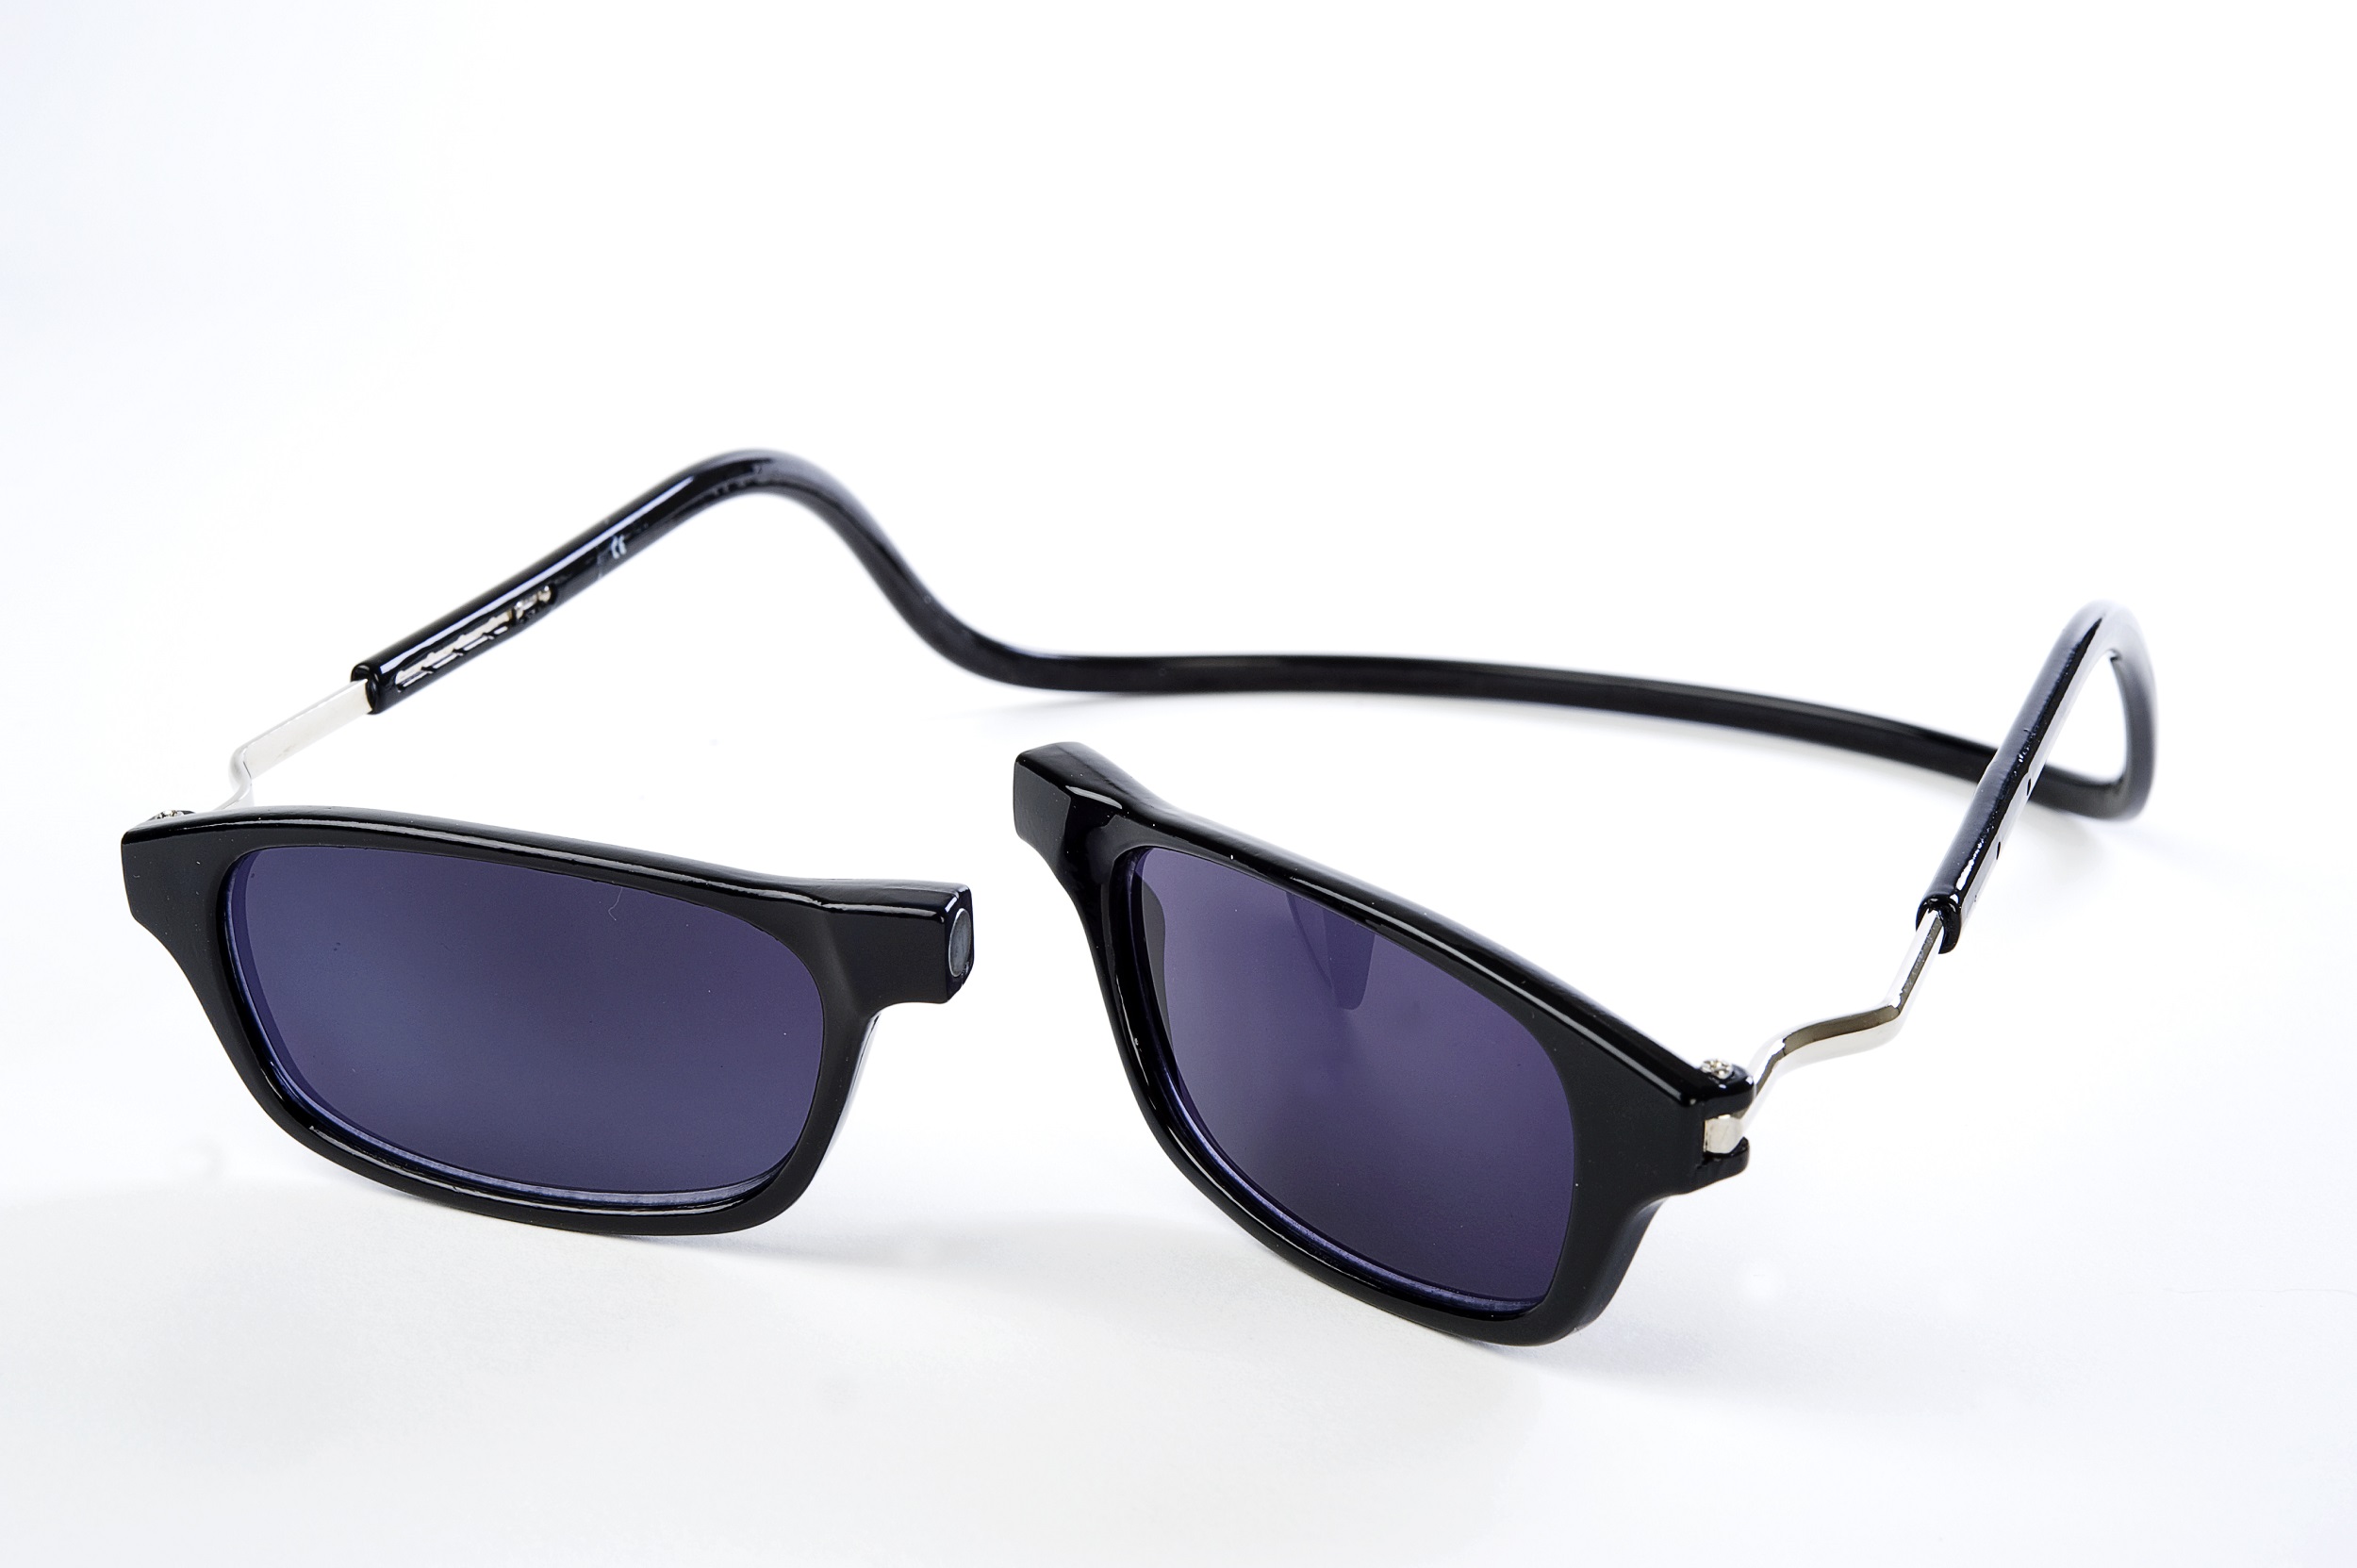 Easy Reader magneetleesbril leesbril met magneetsluiting model Classic XL zon zwart